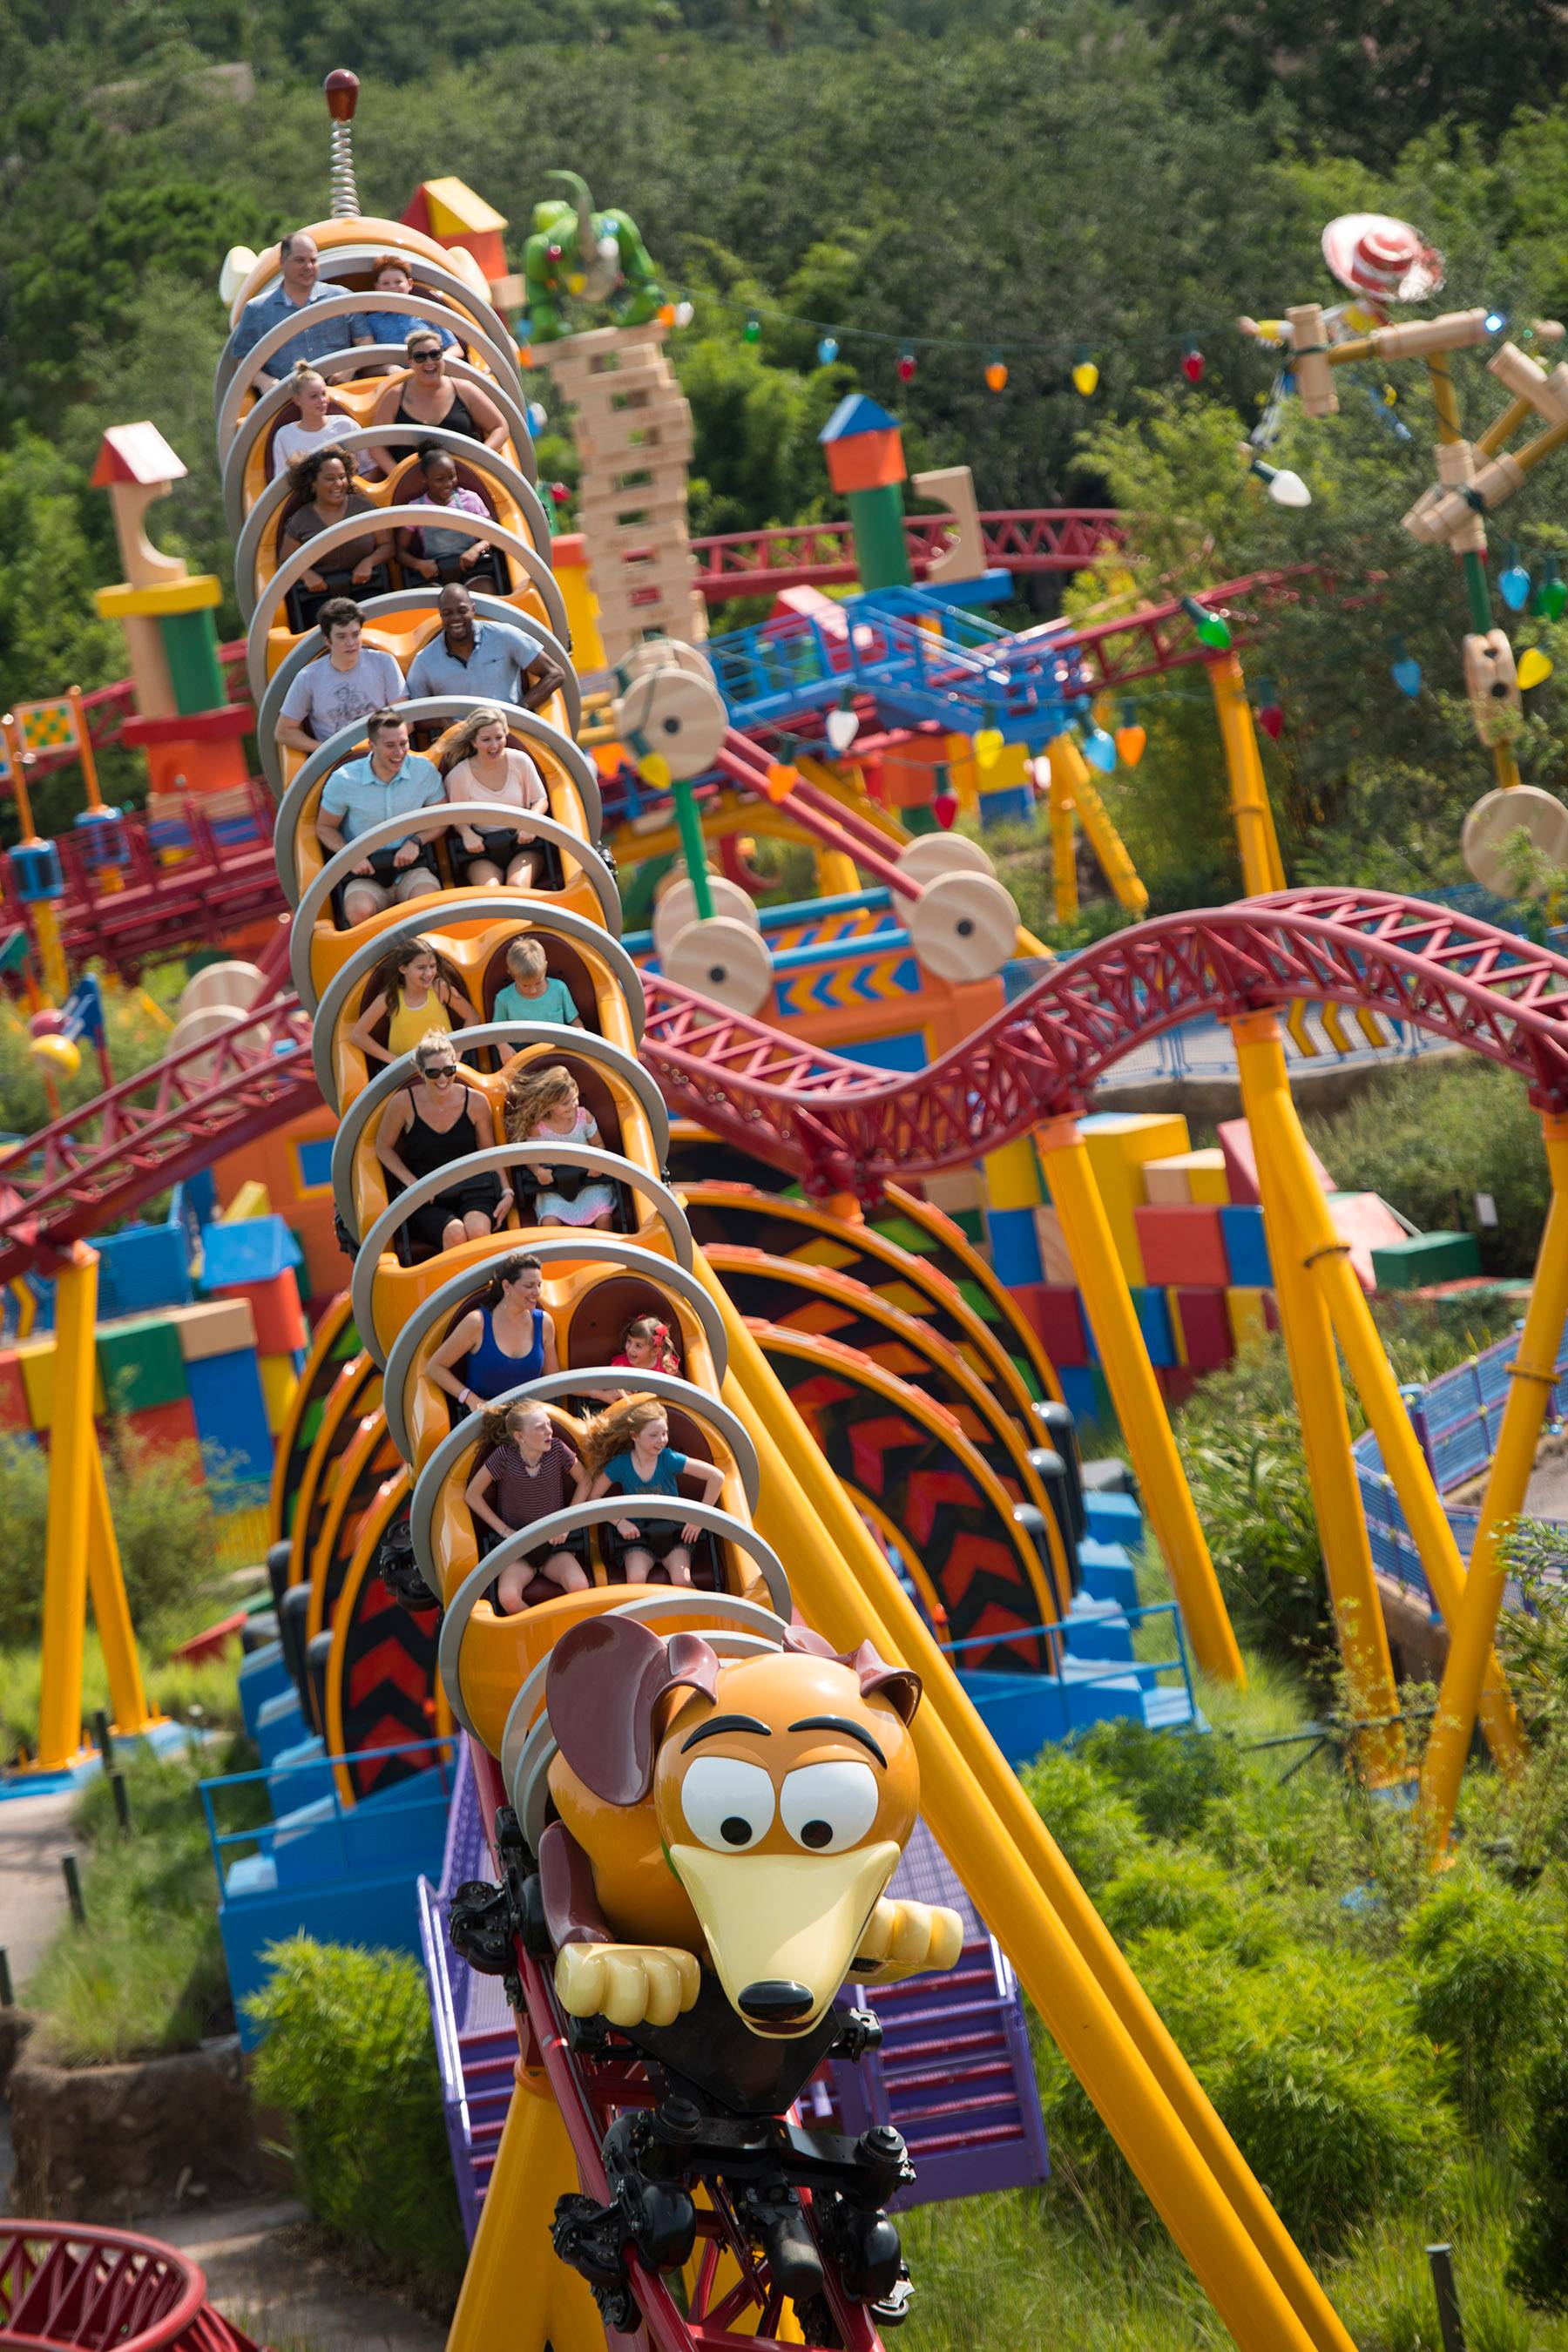 Slinky Dog Dash at Toy Story Land